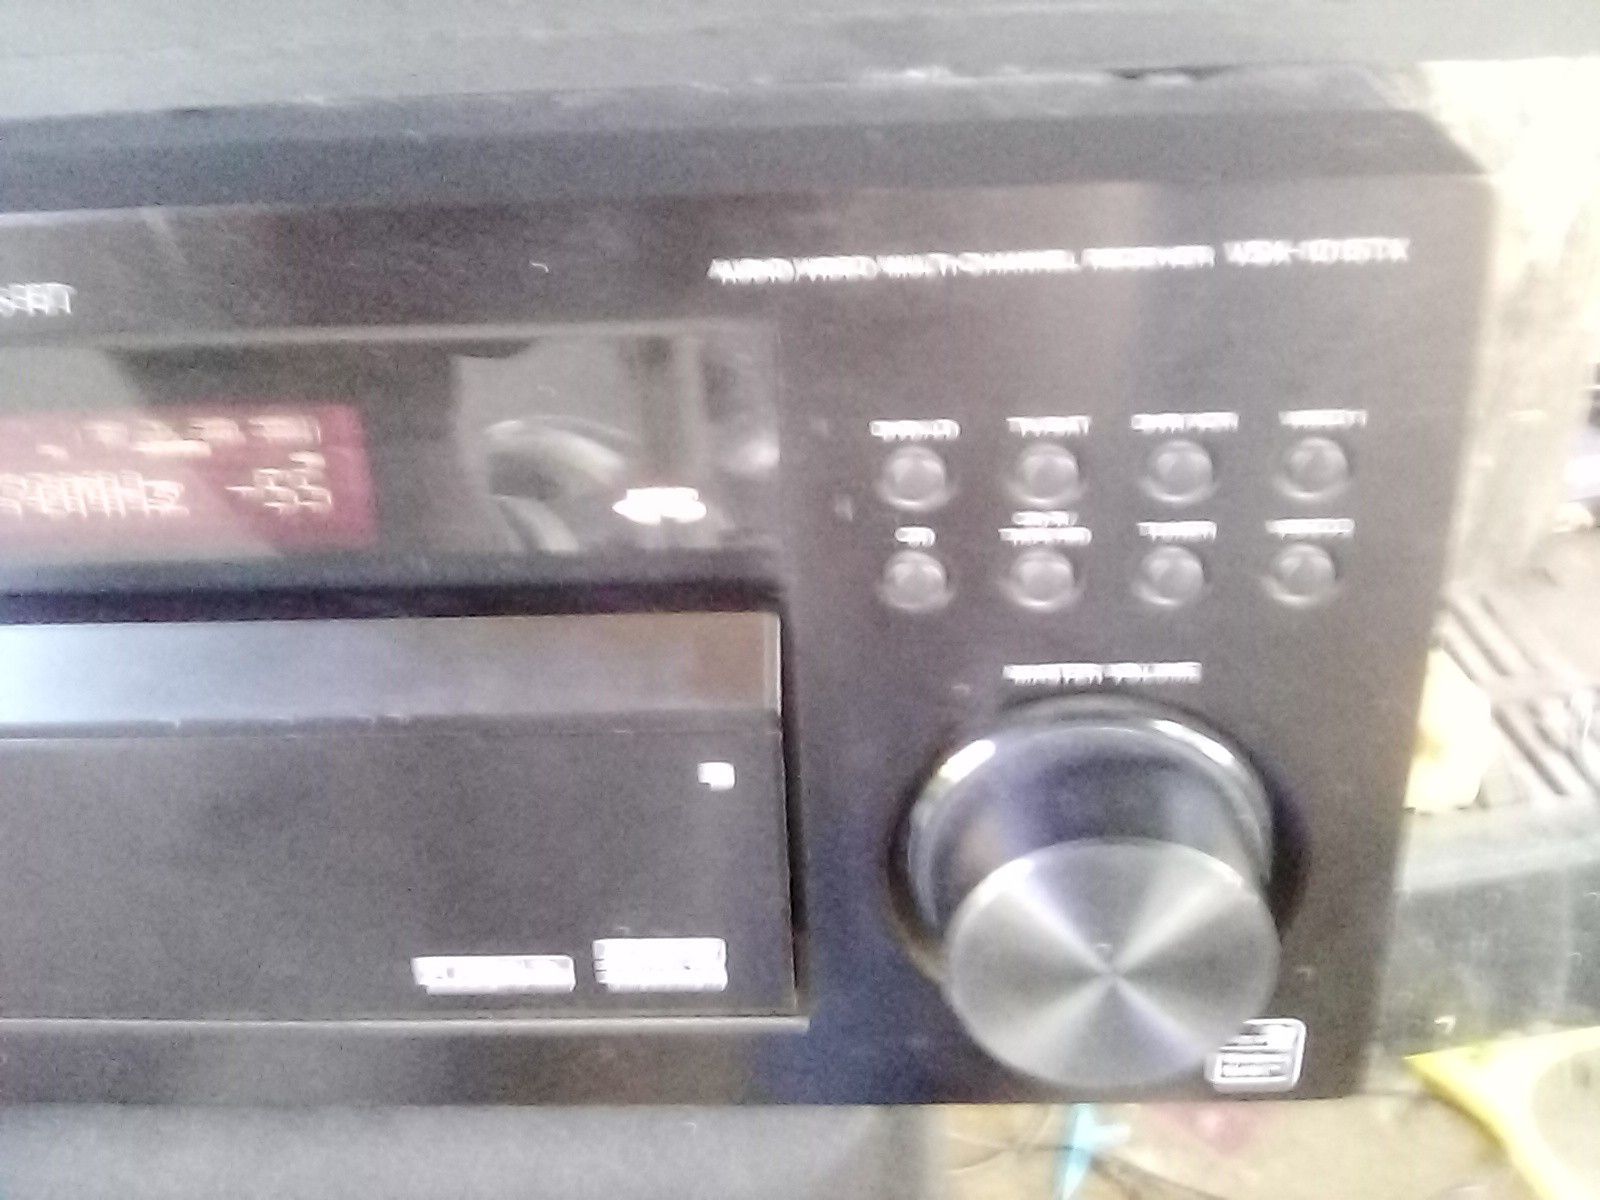 Pioneer vsx-1015tx receiver,klipsch large center speaker rc25bk model no. And a jbl powered sub model E150p